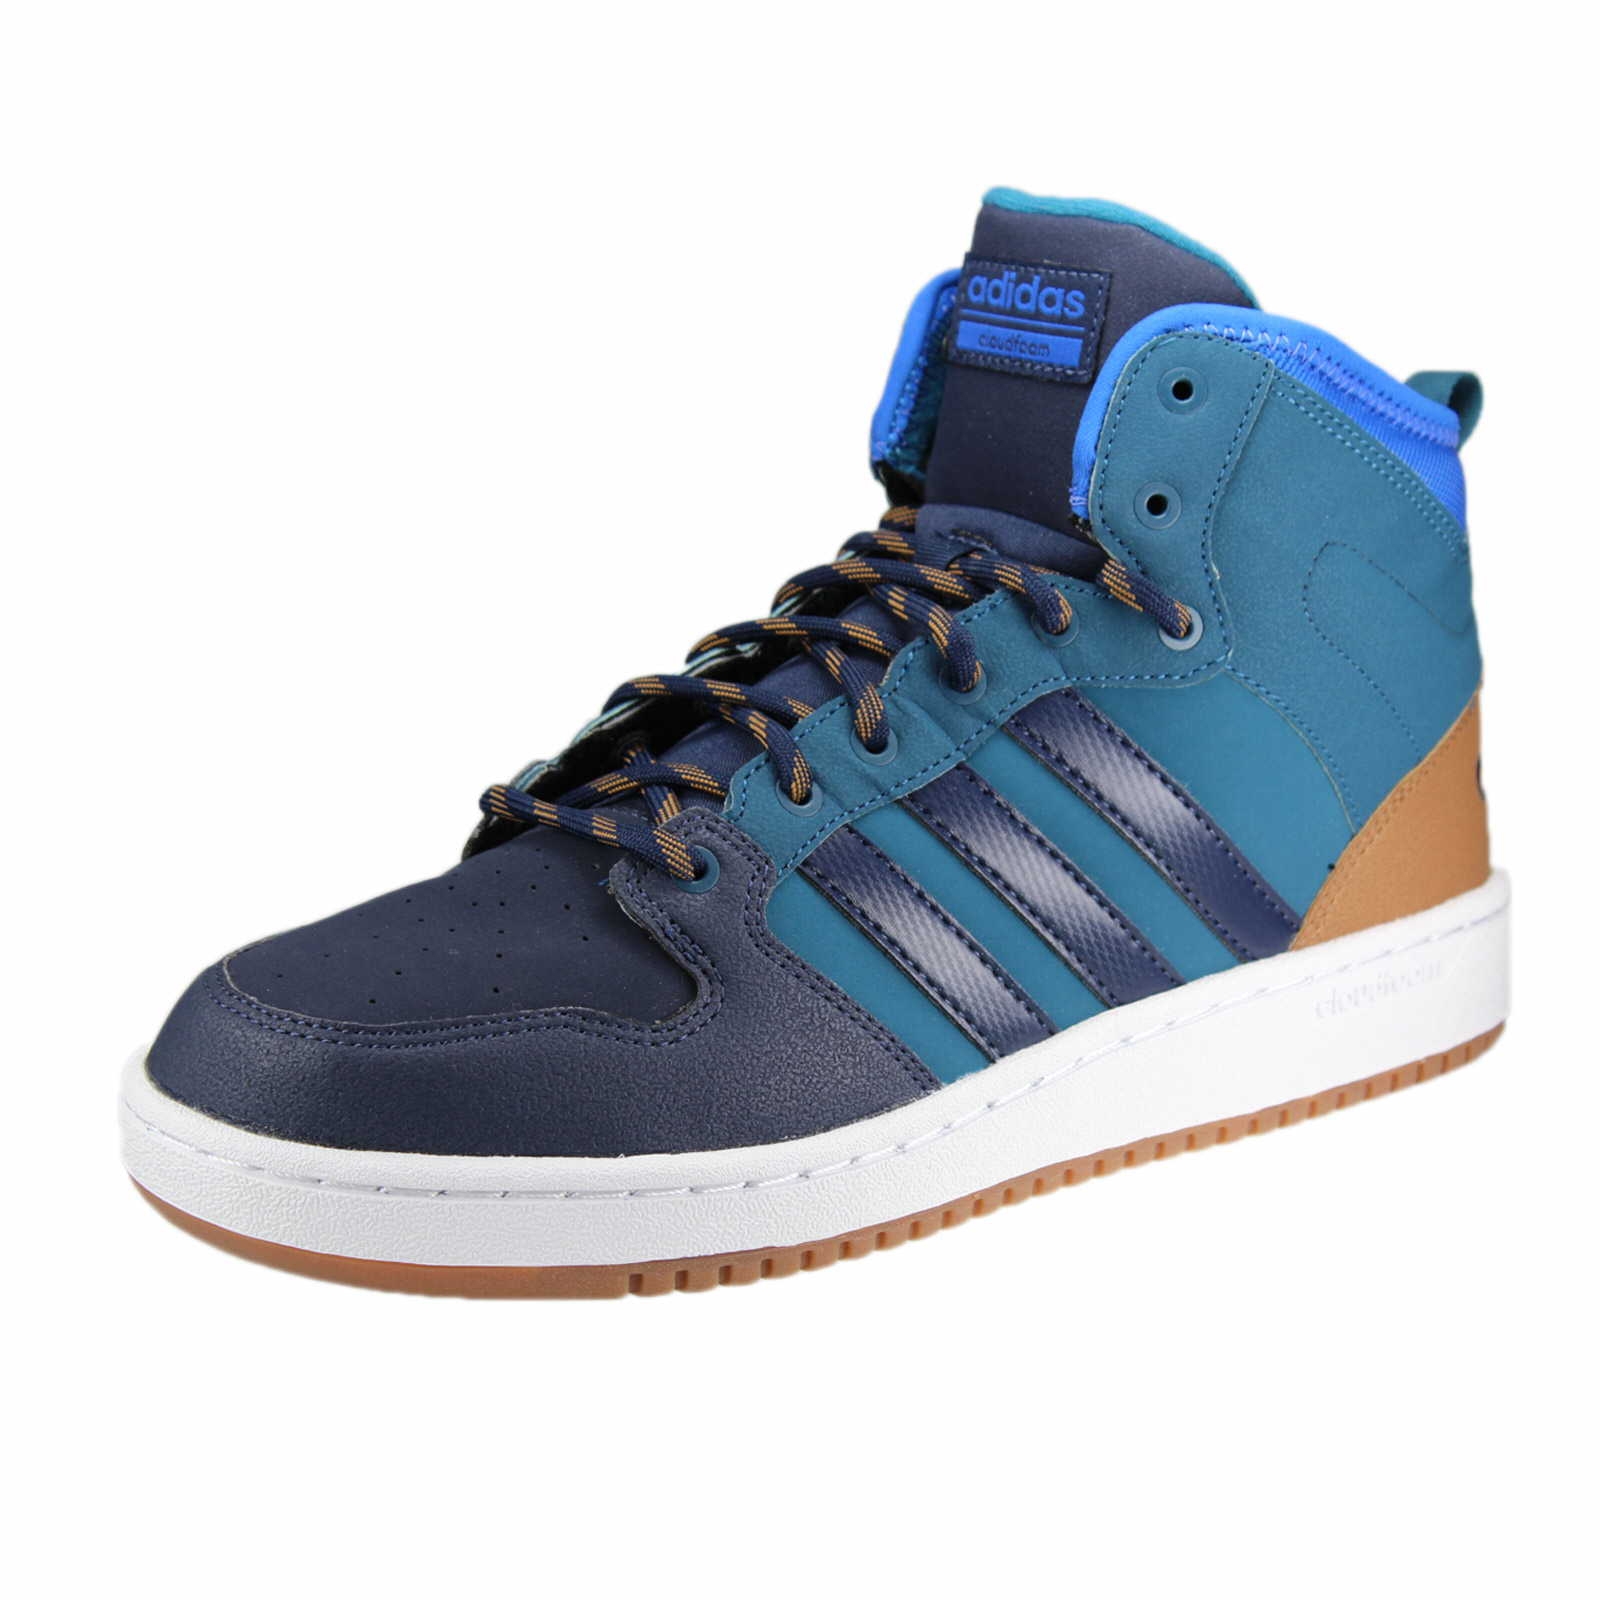 Adidas Neo Sneaker In Blau Schuhparadies